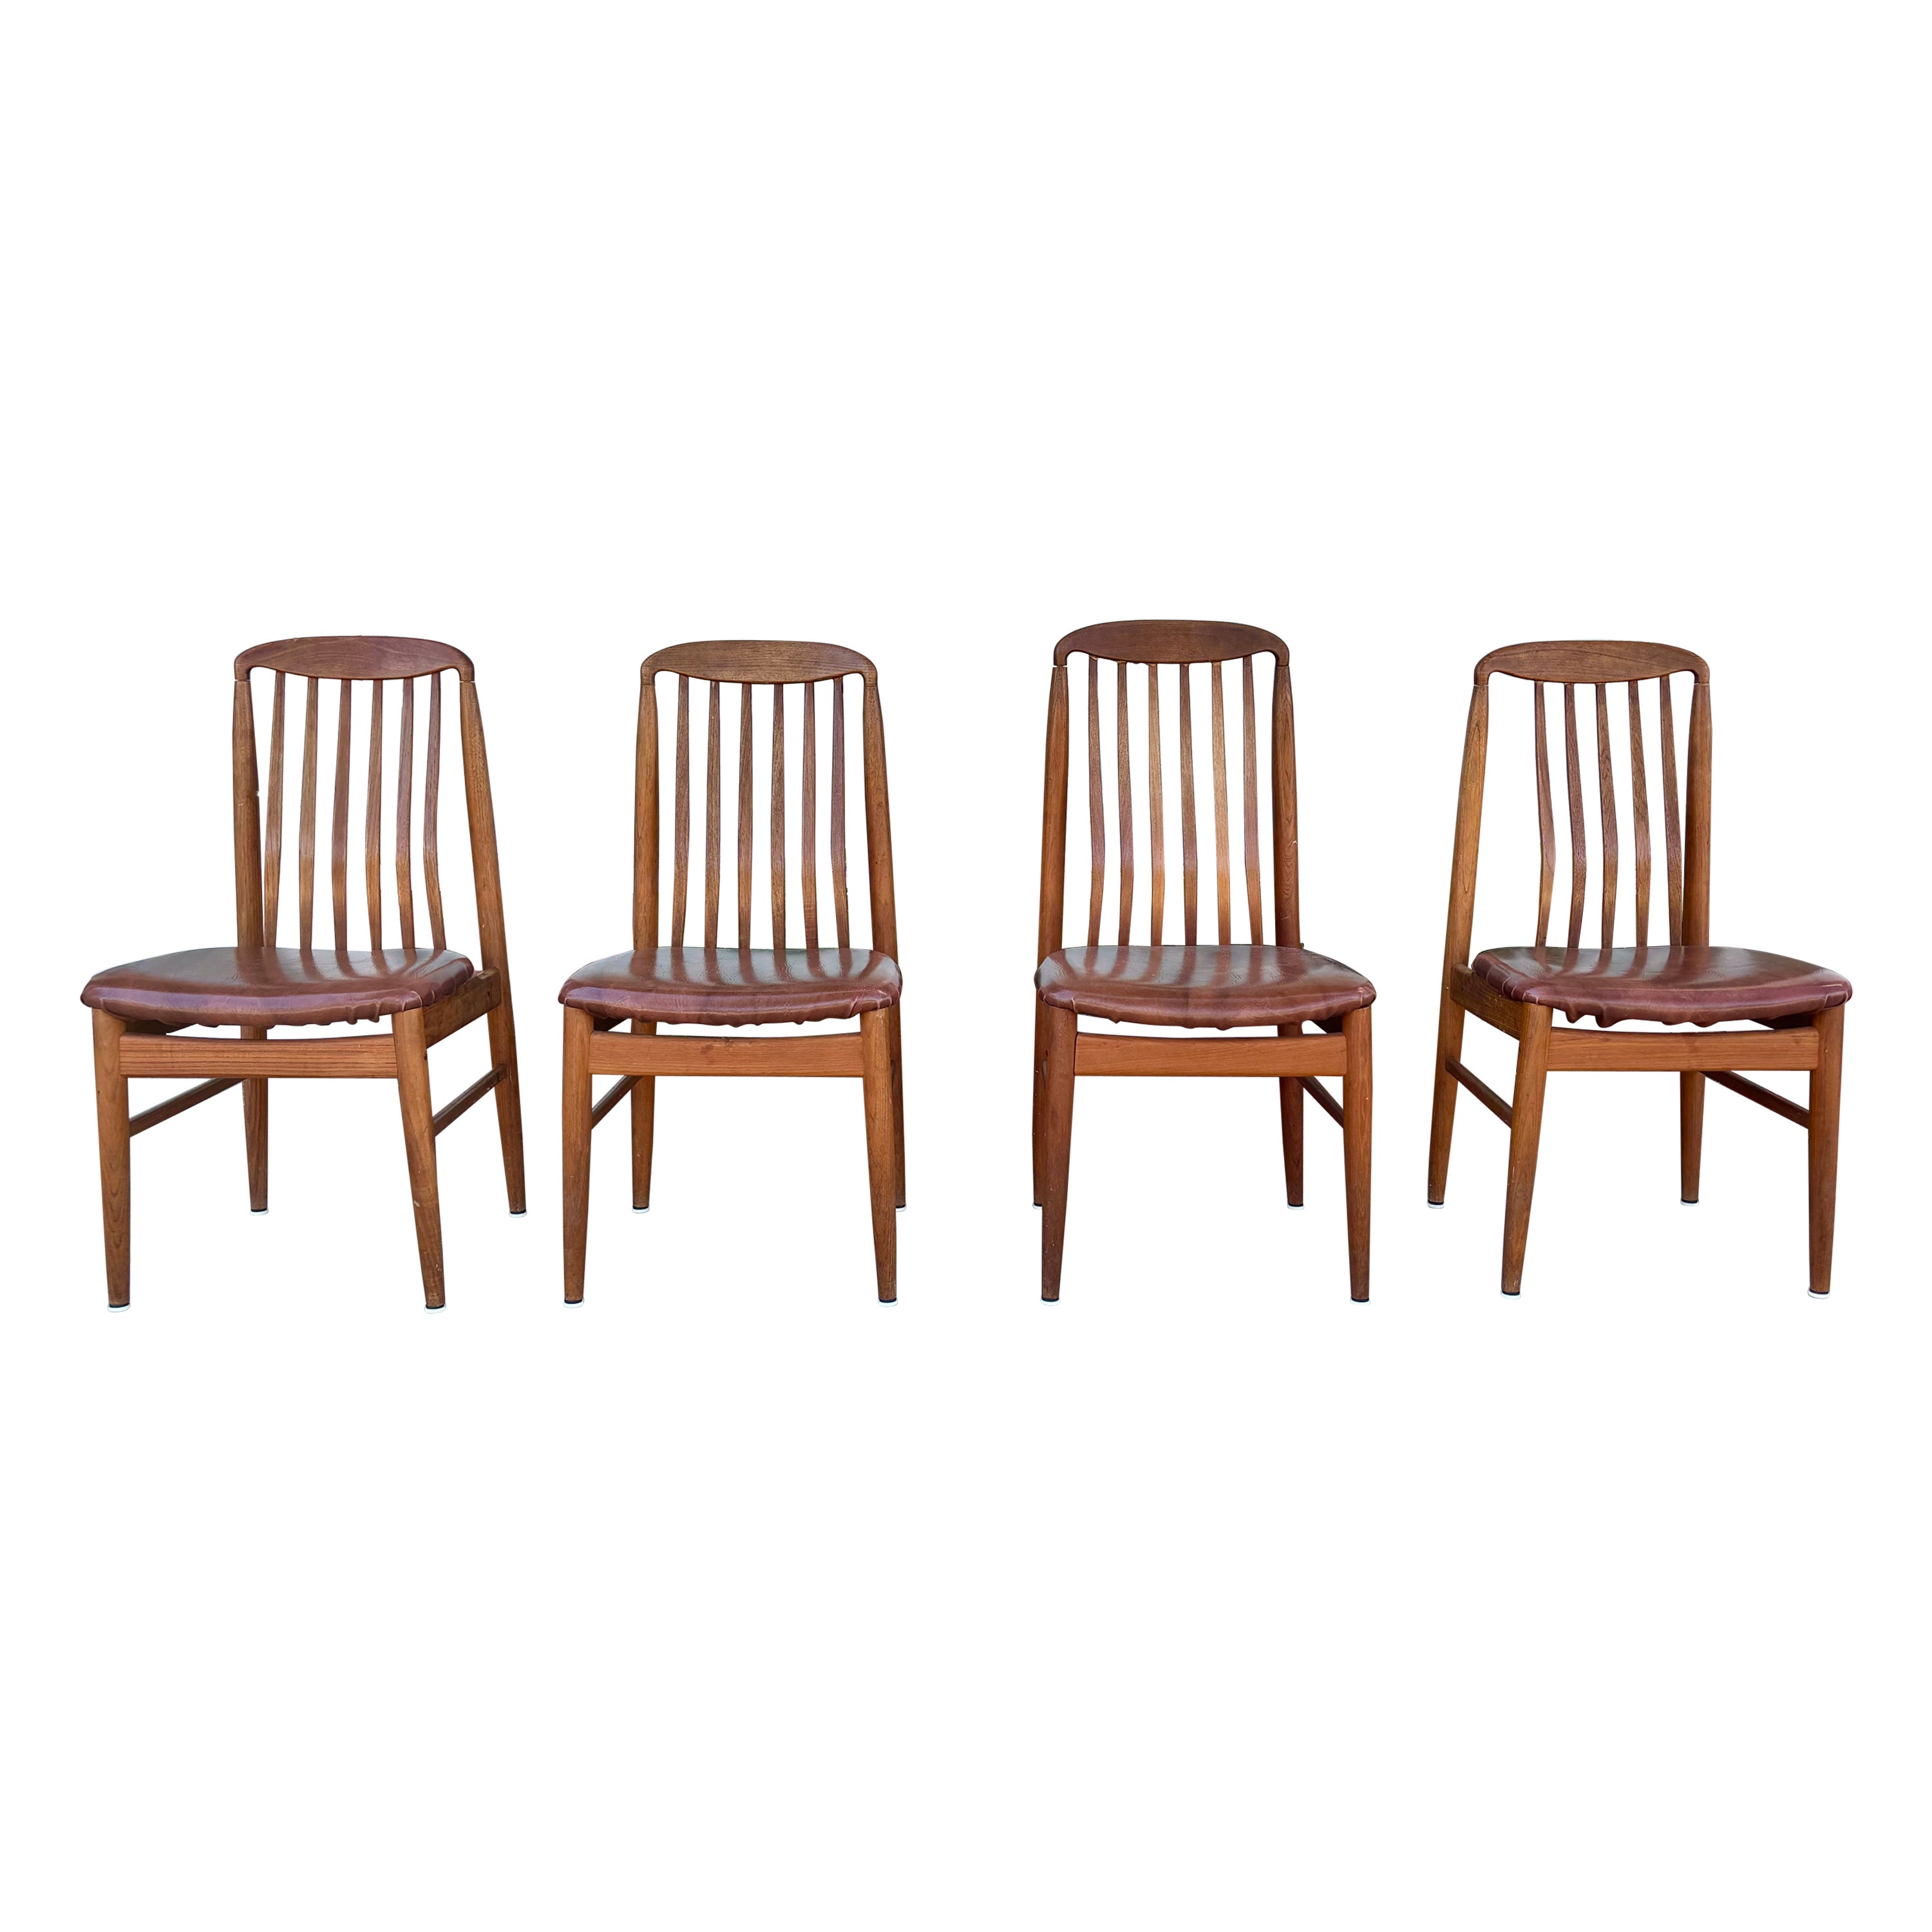 1960s Danish Modern Teak Dining Chairs - Set of 4